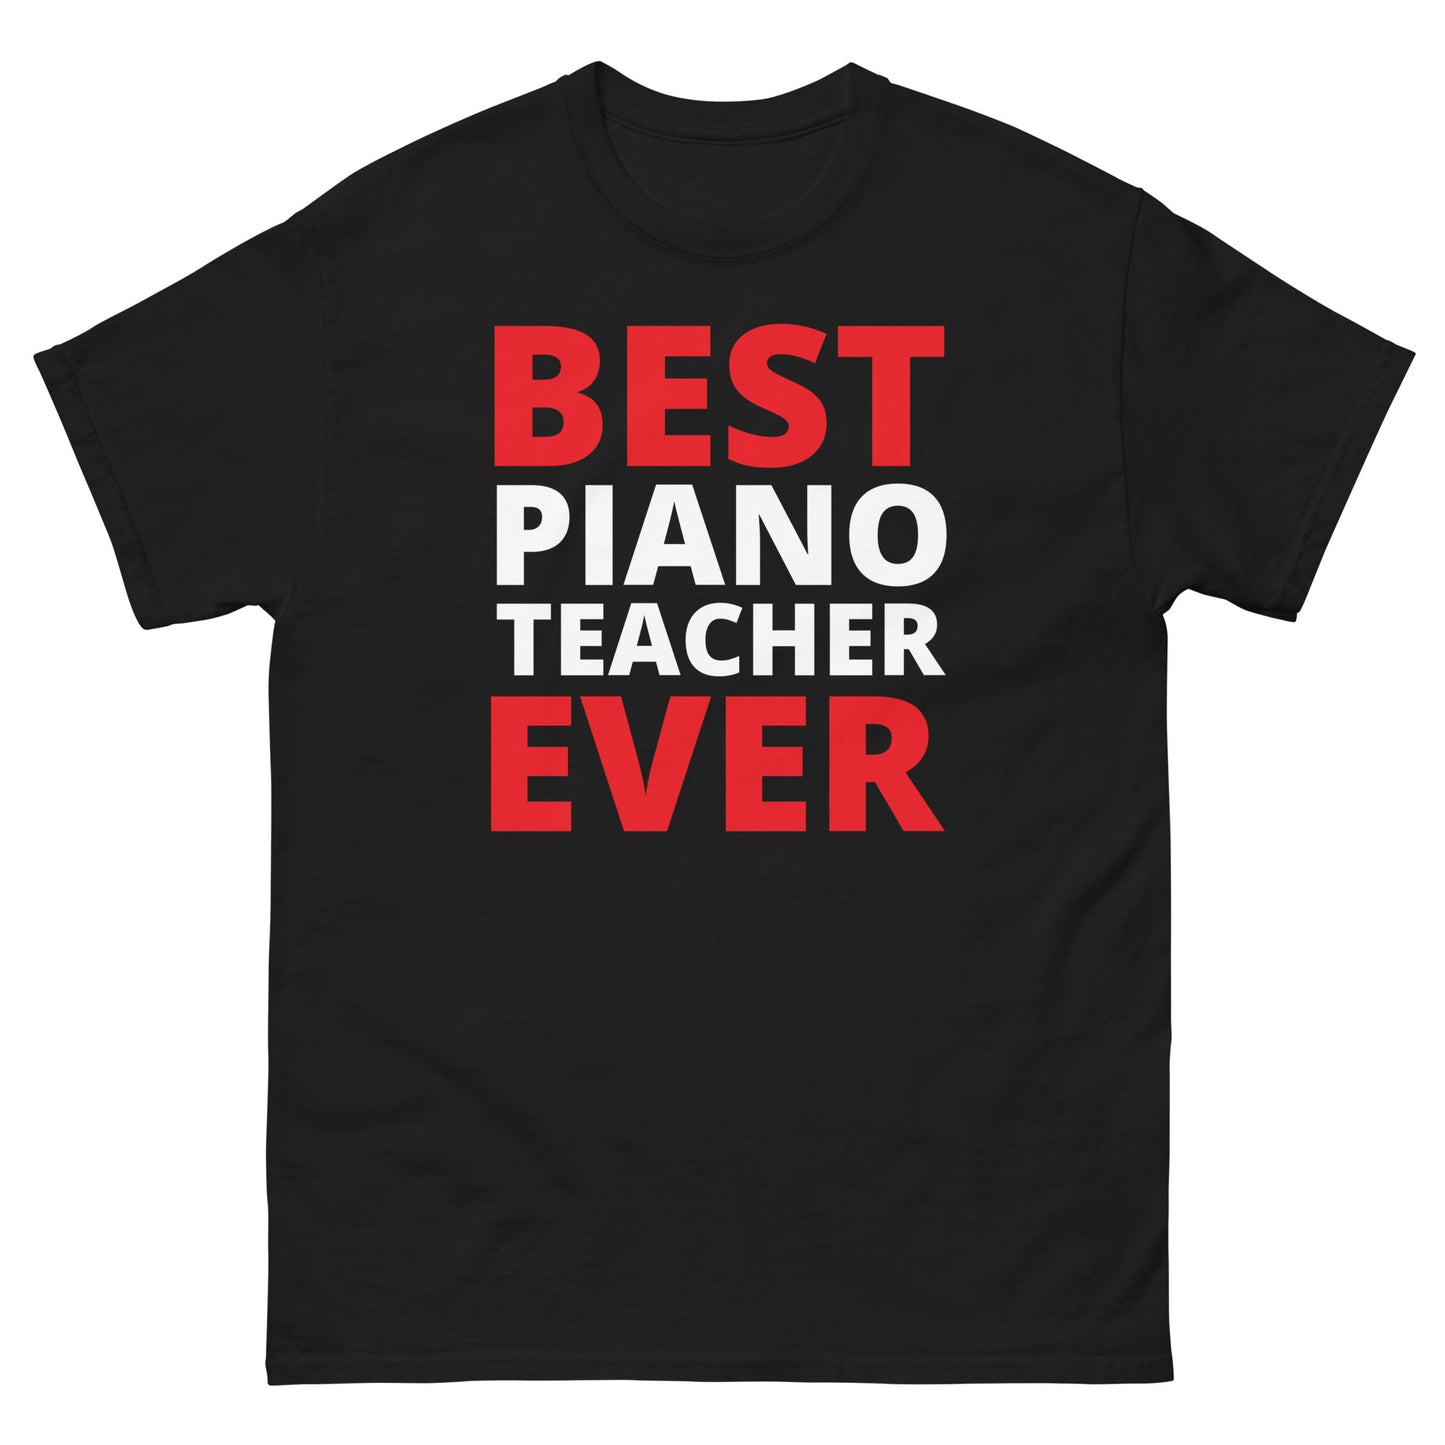 Best piano teacher ever classic tee